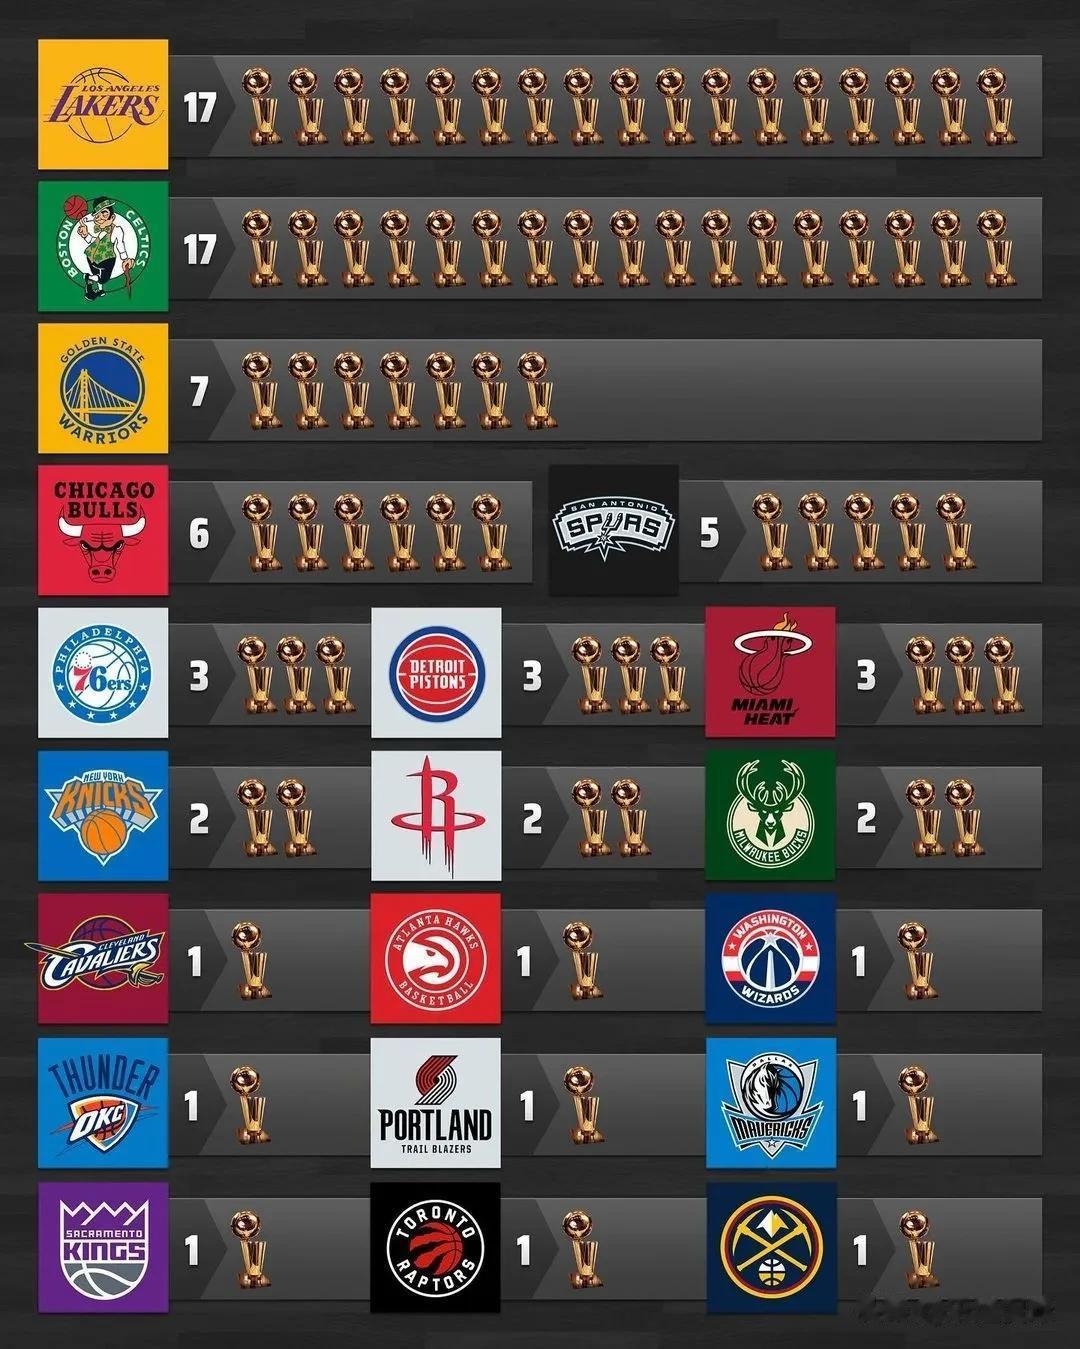 NBA历史决赛对阵成绩，及总冠军排行榜。
NBA总决赛落下帷幕，掘金队总比分4-(2)